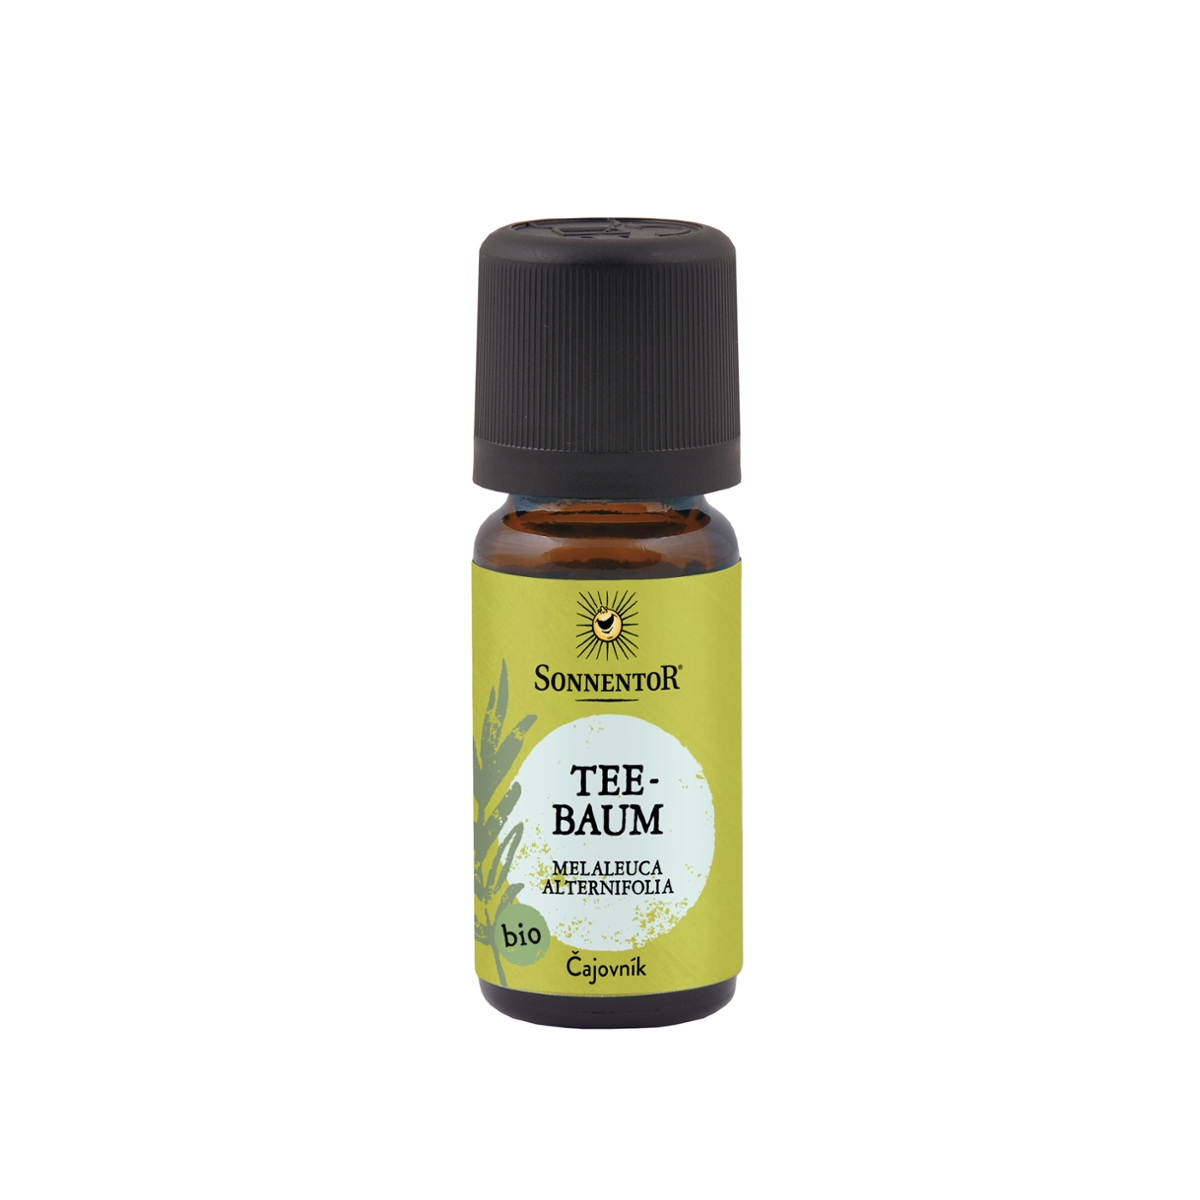 Sonnentor - Teebaum ätherisches Öl